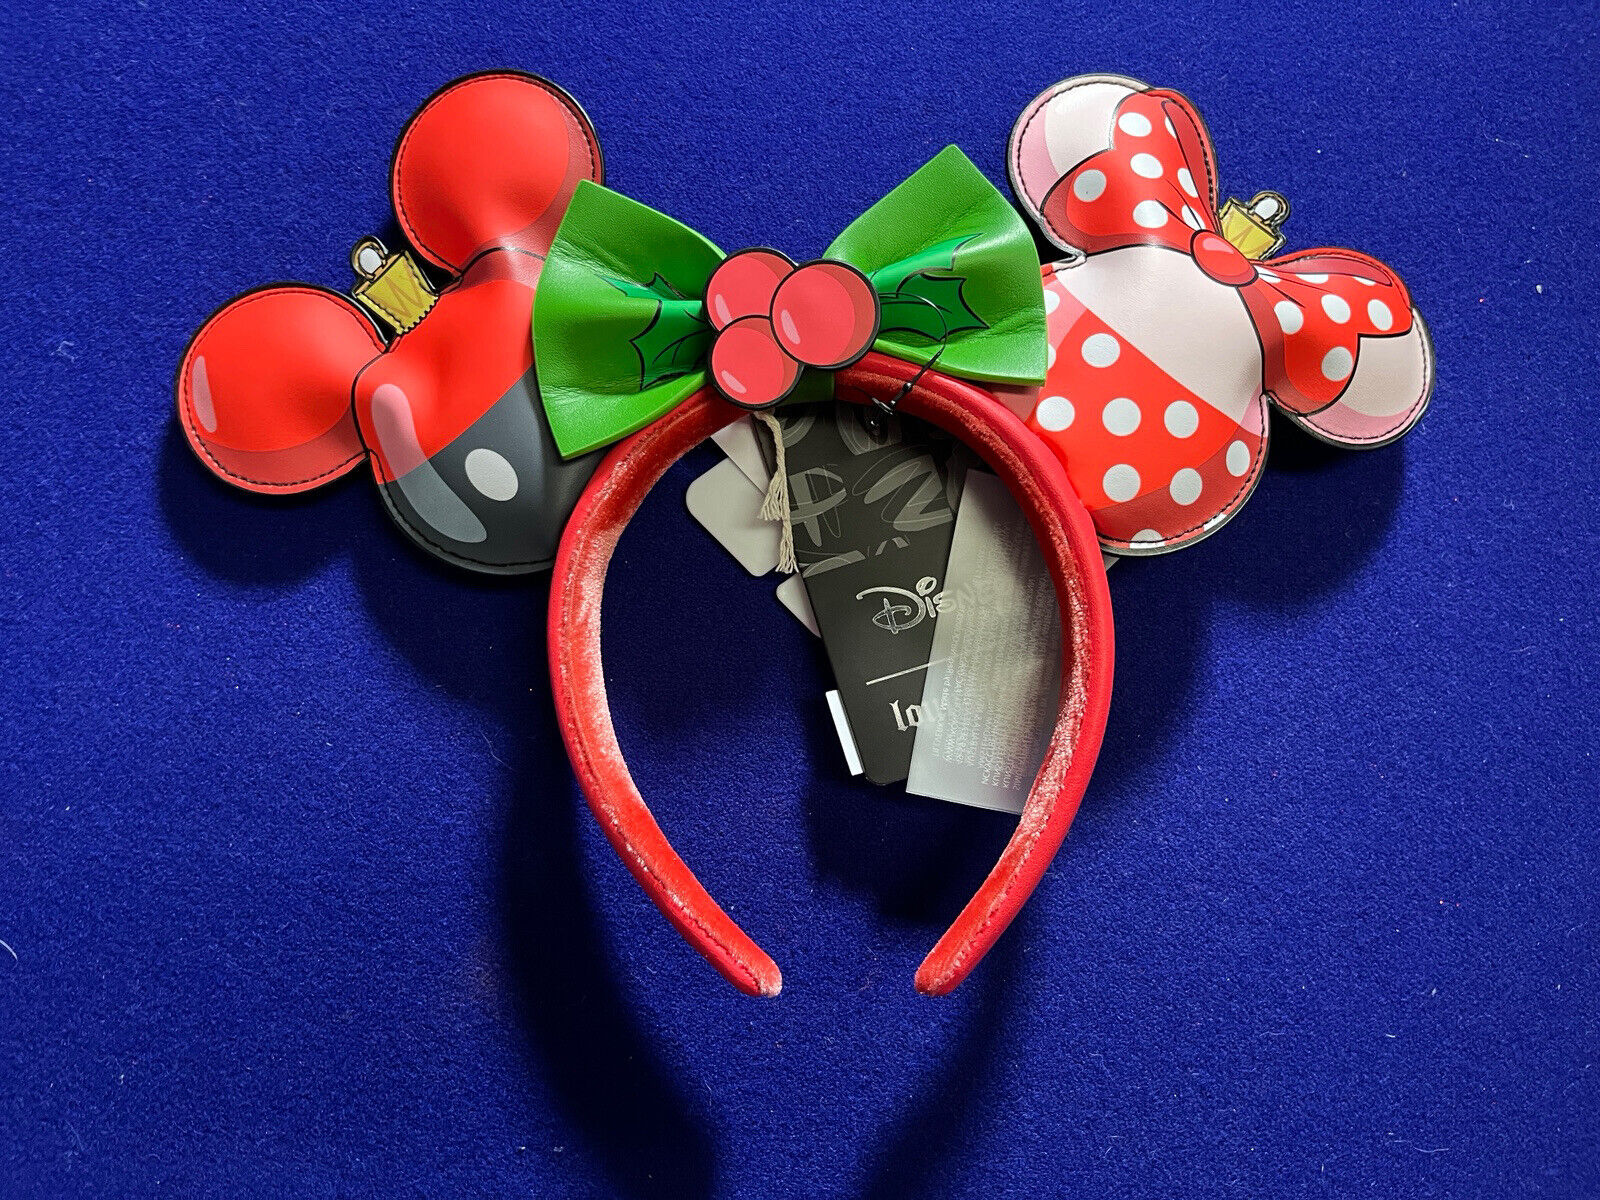 Loungfly x Disney Mickey & Minnie Mouse Christmas Holiday Ornament Ear Headband